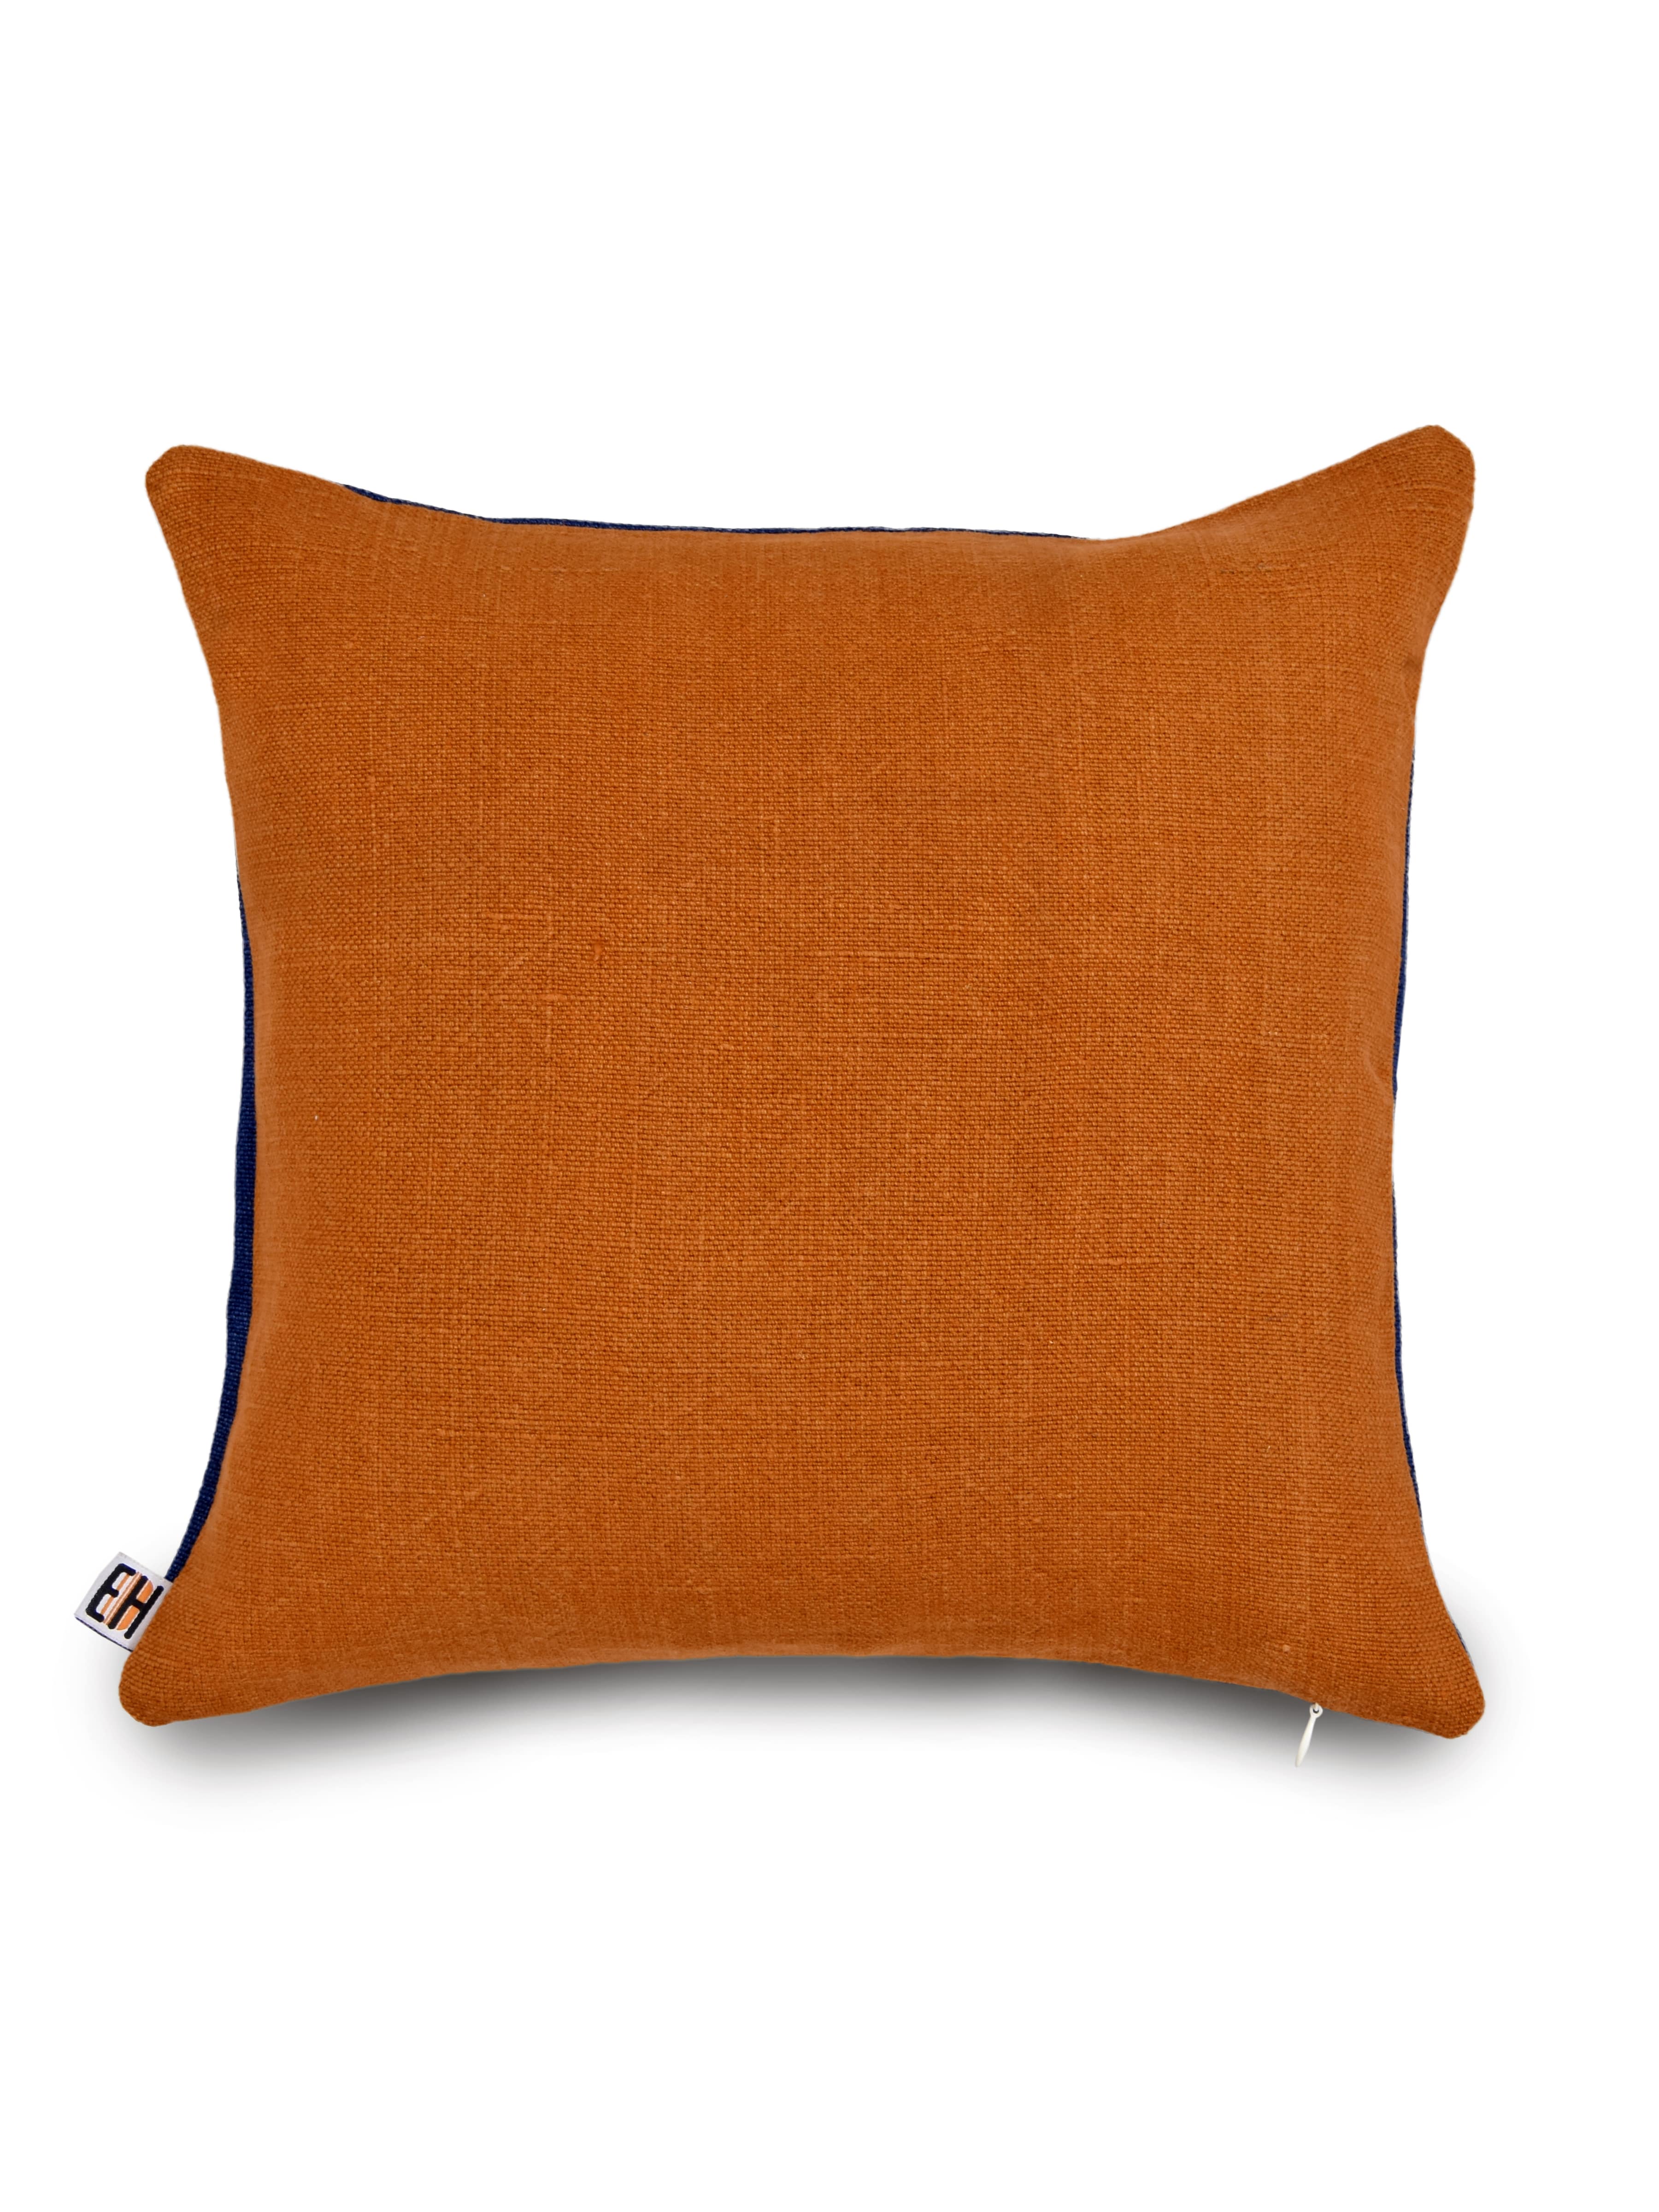 Blue and Orange Hemp Tree Hand Embroidered Cushion Cover